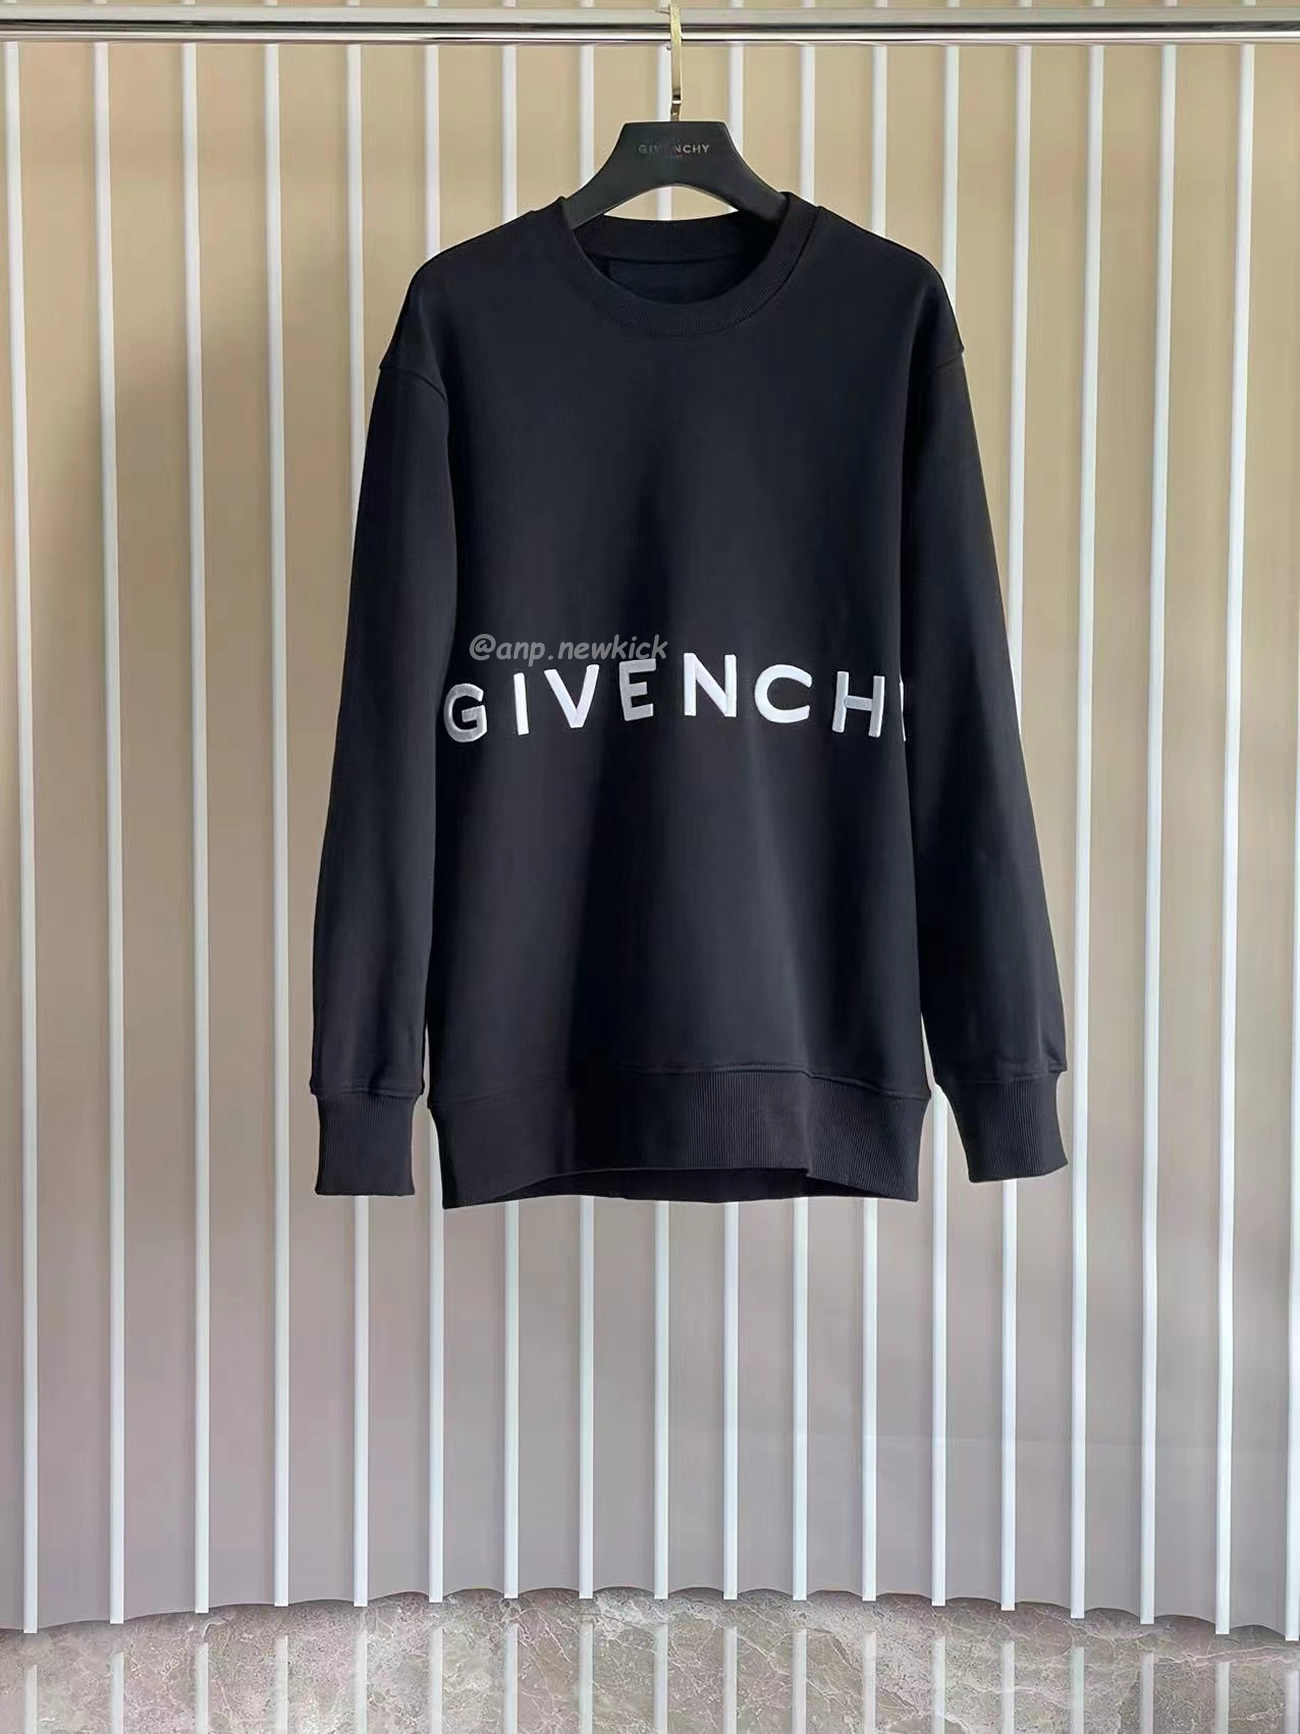 Givenchy Archetype Slim Fit Sportswear (10) - newkick.org